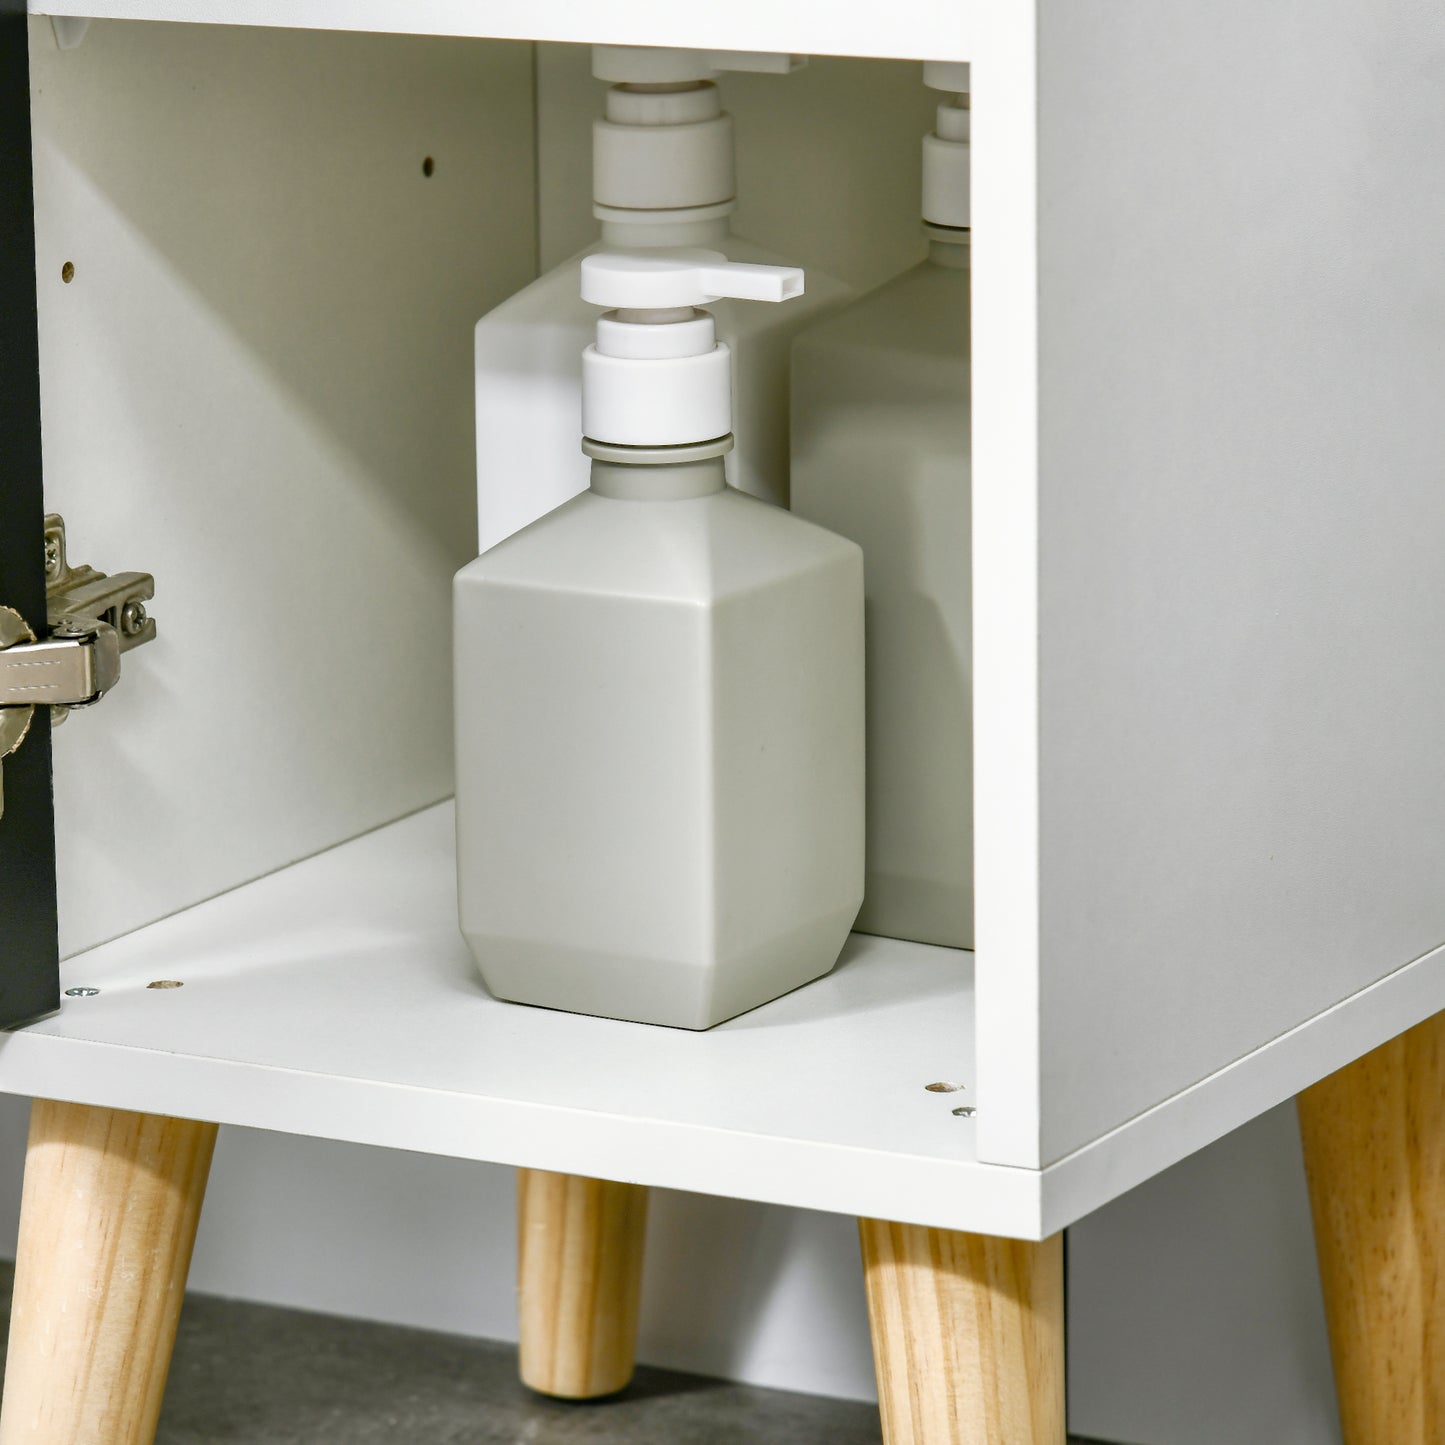 kleankin Bathroom Storage Cabinet, Bathroom Floor Standing Tallboy Unit with Adjustable Shelves and Cabinet, White